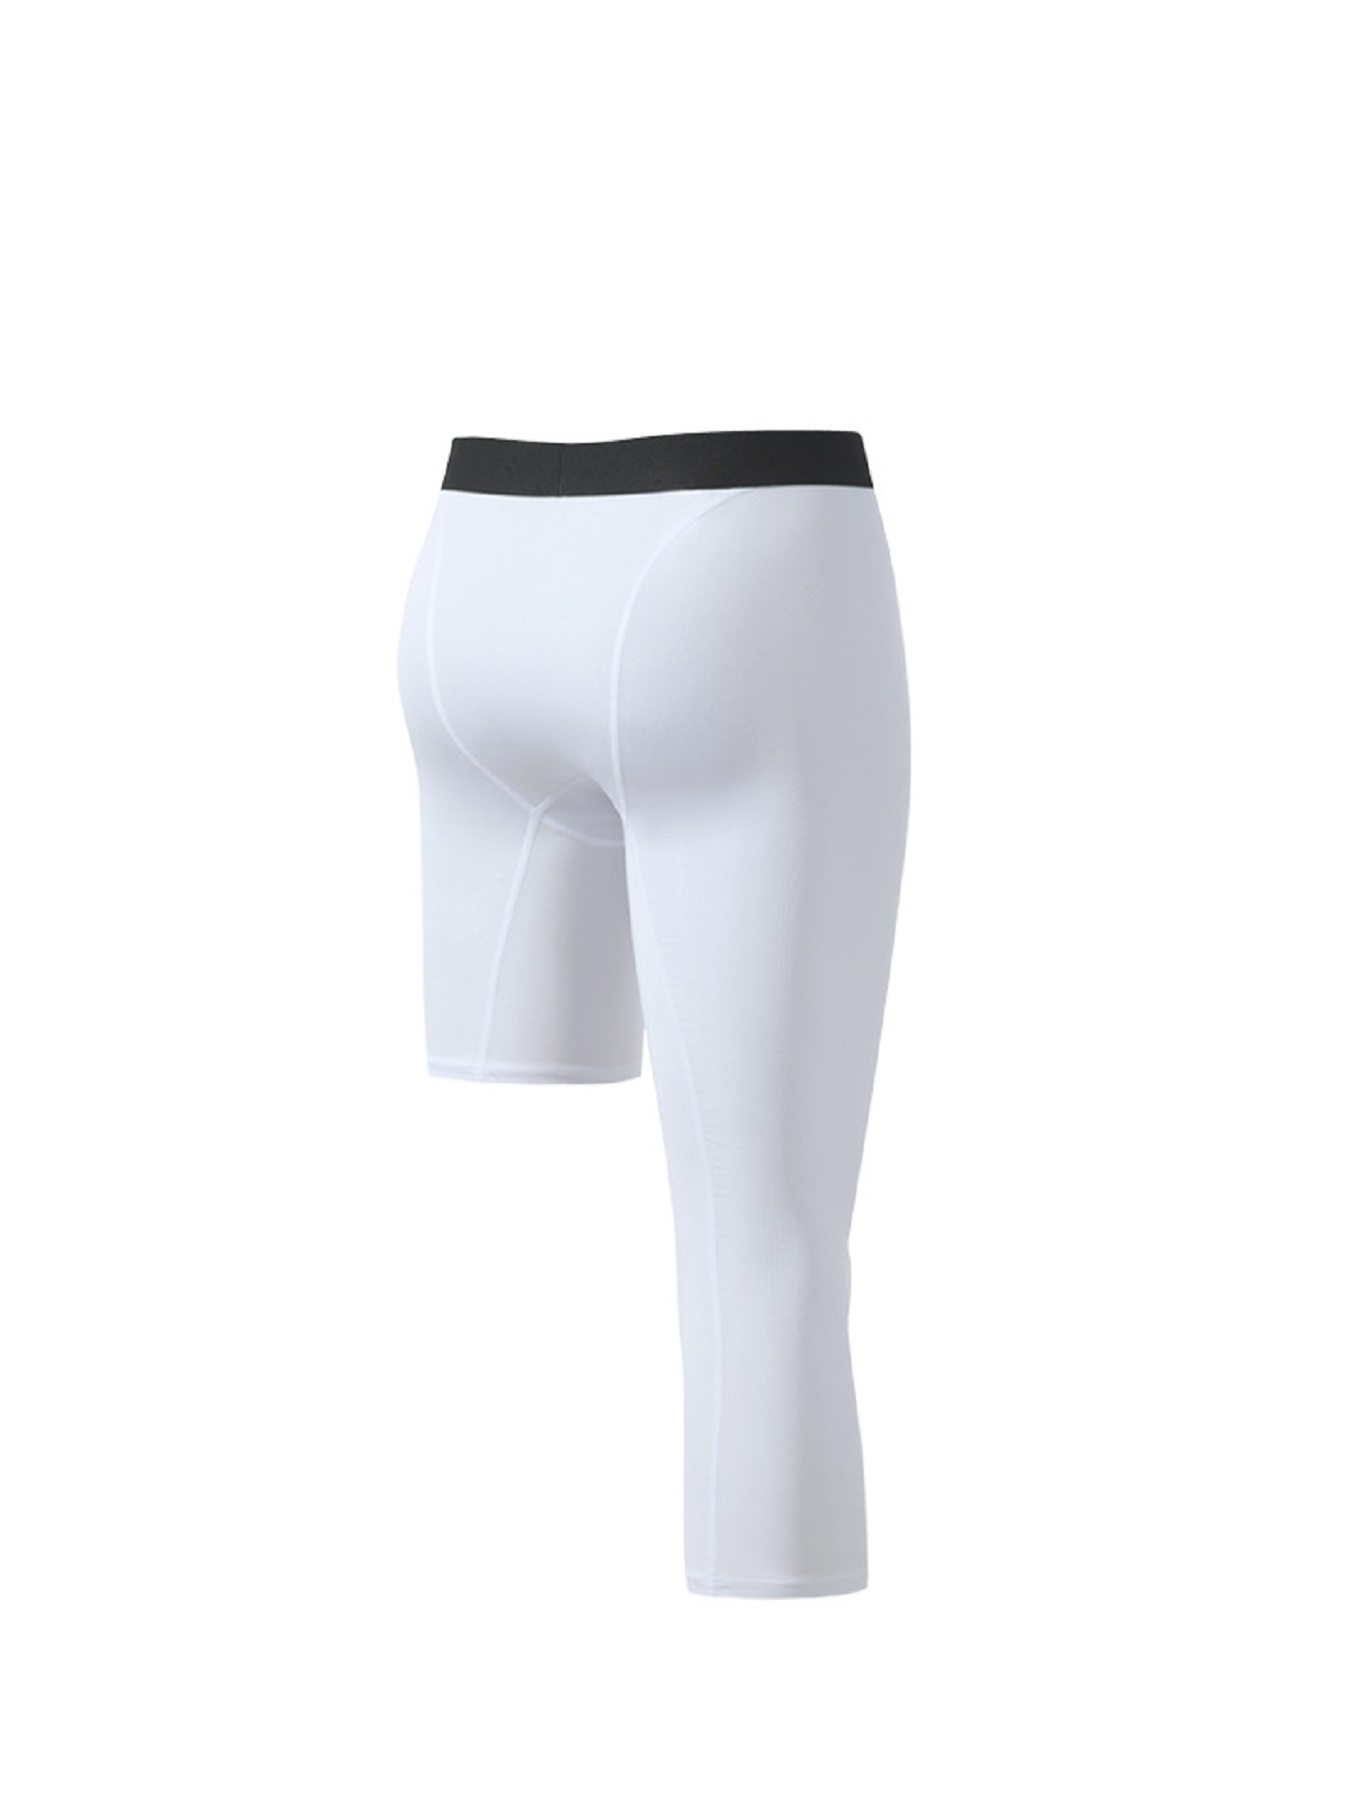 Men One Leg Compression Pants 3/4 Capri Tights Athletic Basketball Leggings  Workout Base Layer Underwear (Black 1, L) 